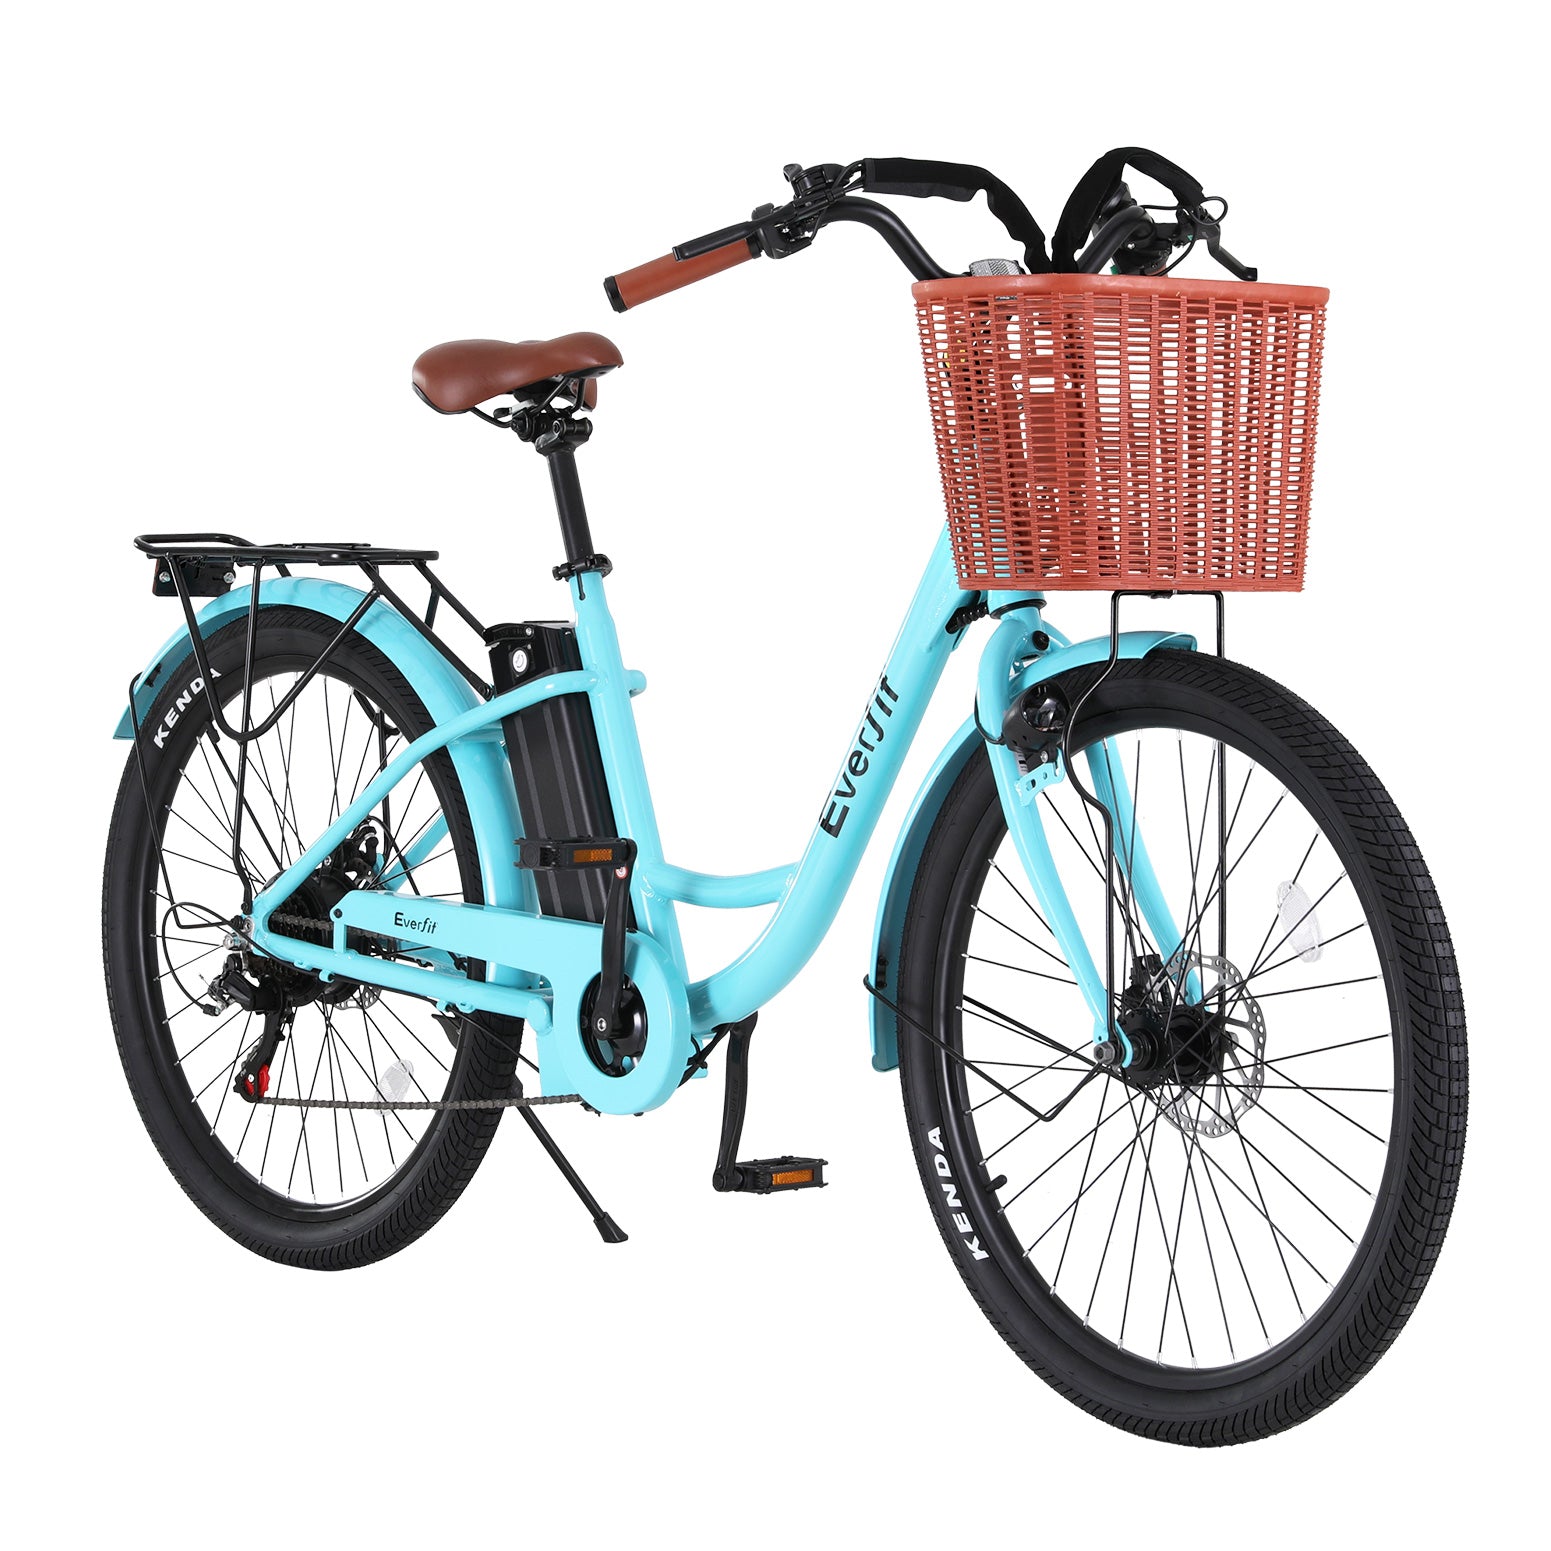 Everfit 26" Electric Bike City Bicycle eBike e-Bike Commuter w/ Battery BL